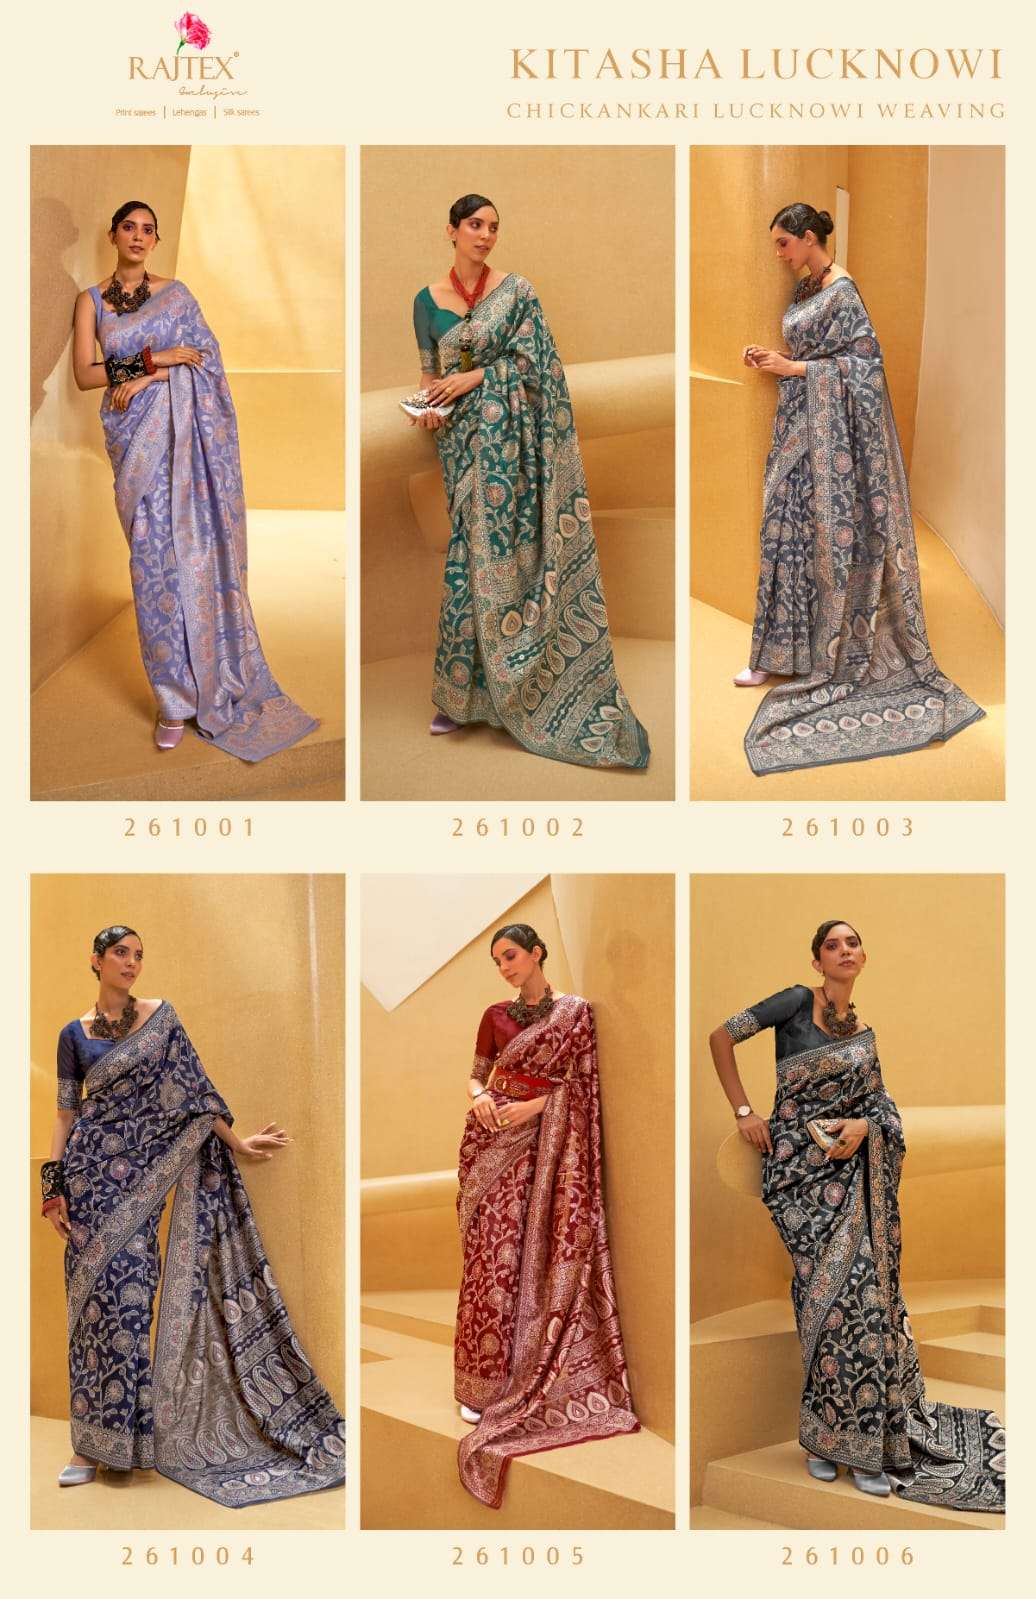 Rajtex Kitasha Lucknowi Designer Chikankari Weaving Sarees Wholesale catalog